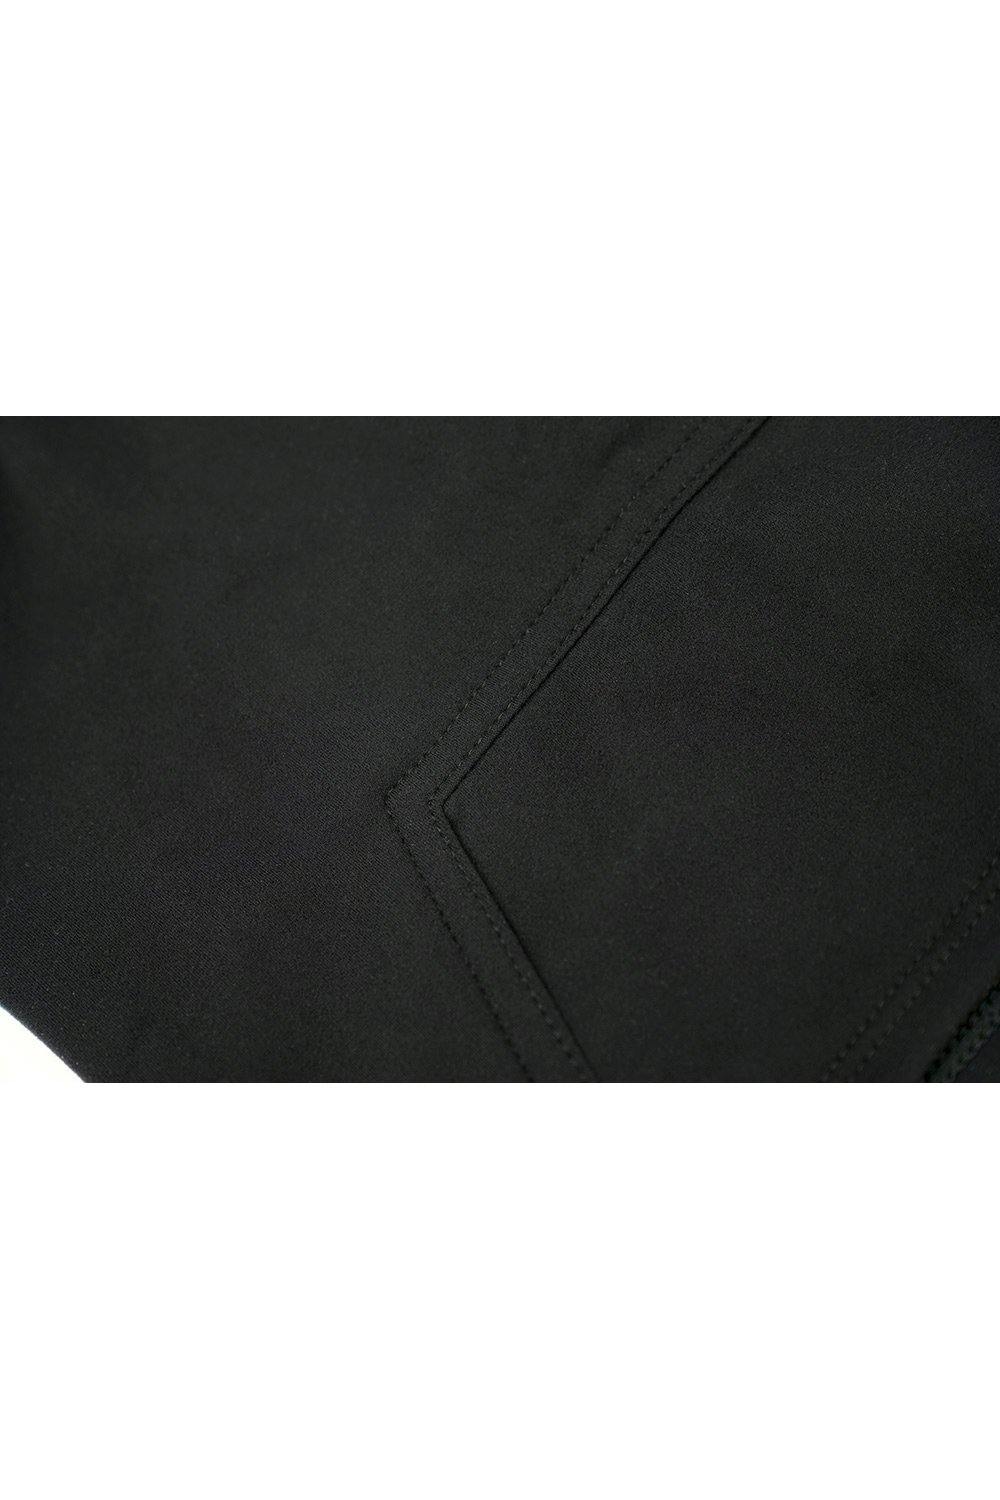 Sundried Thermal Cycle Balaclava Hats Default Black SD0312 Black Activewear